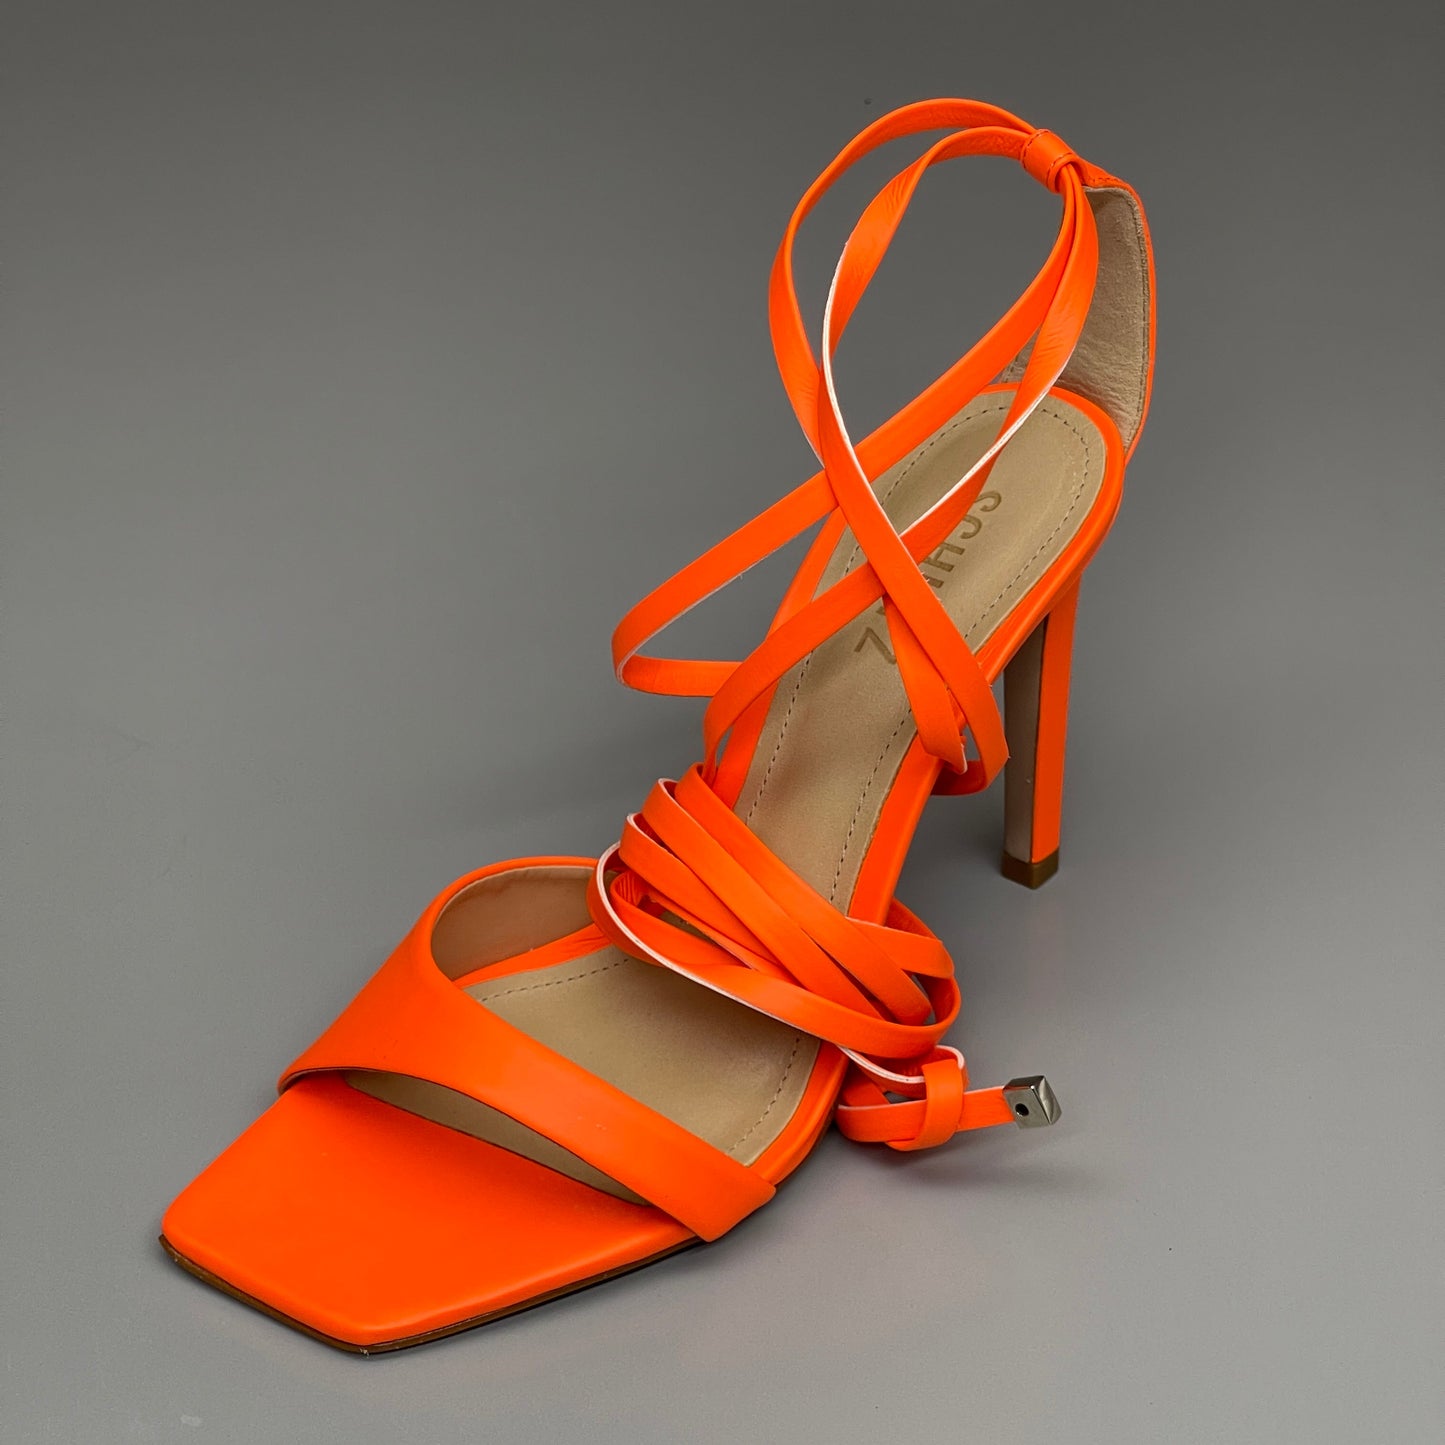 SCHUTZ Bryce Ankle Tie Women's High Heel Leather Strappy Sandal Acid Orange Sz 6 (New)